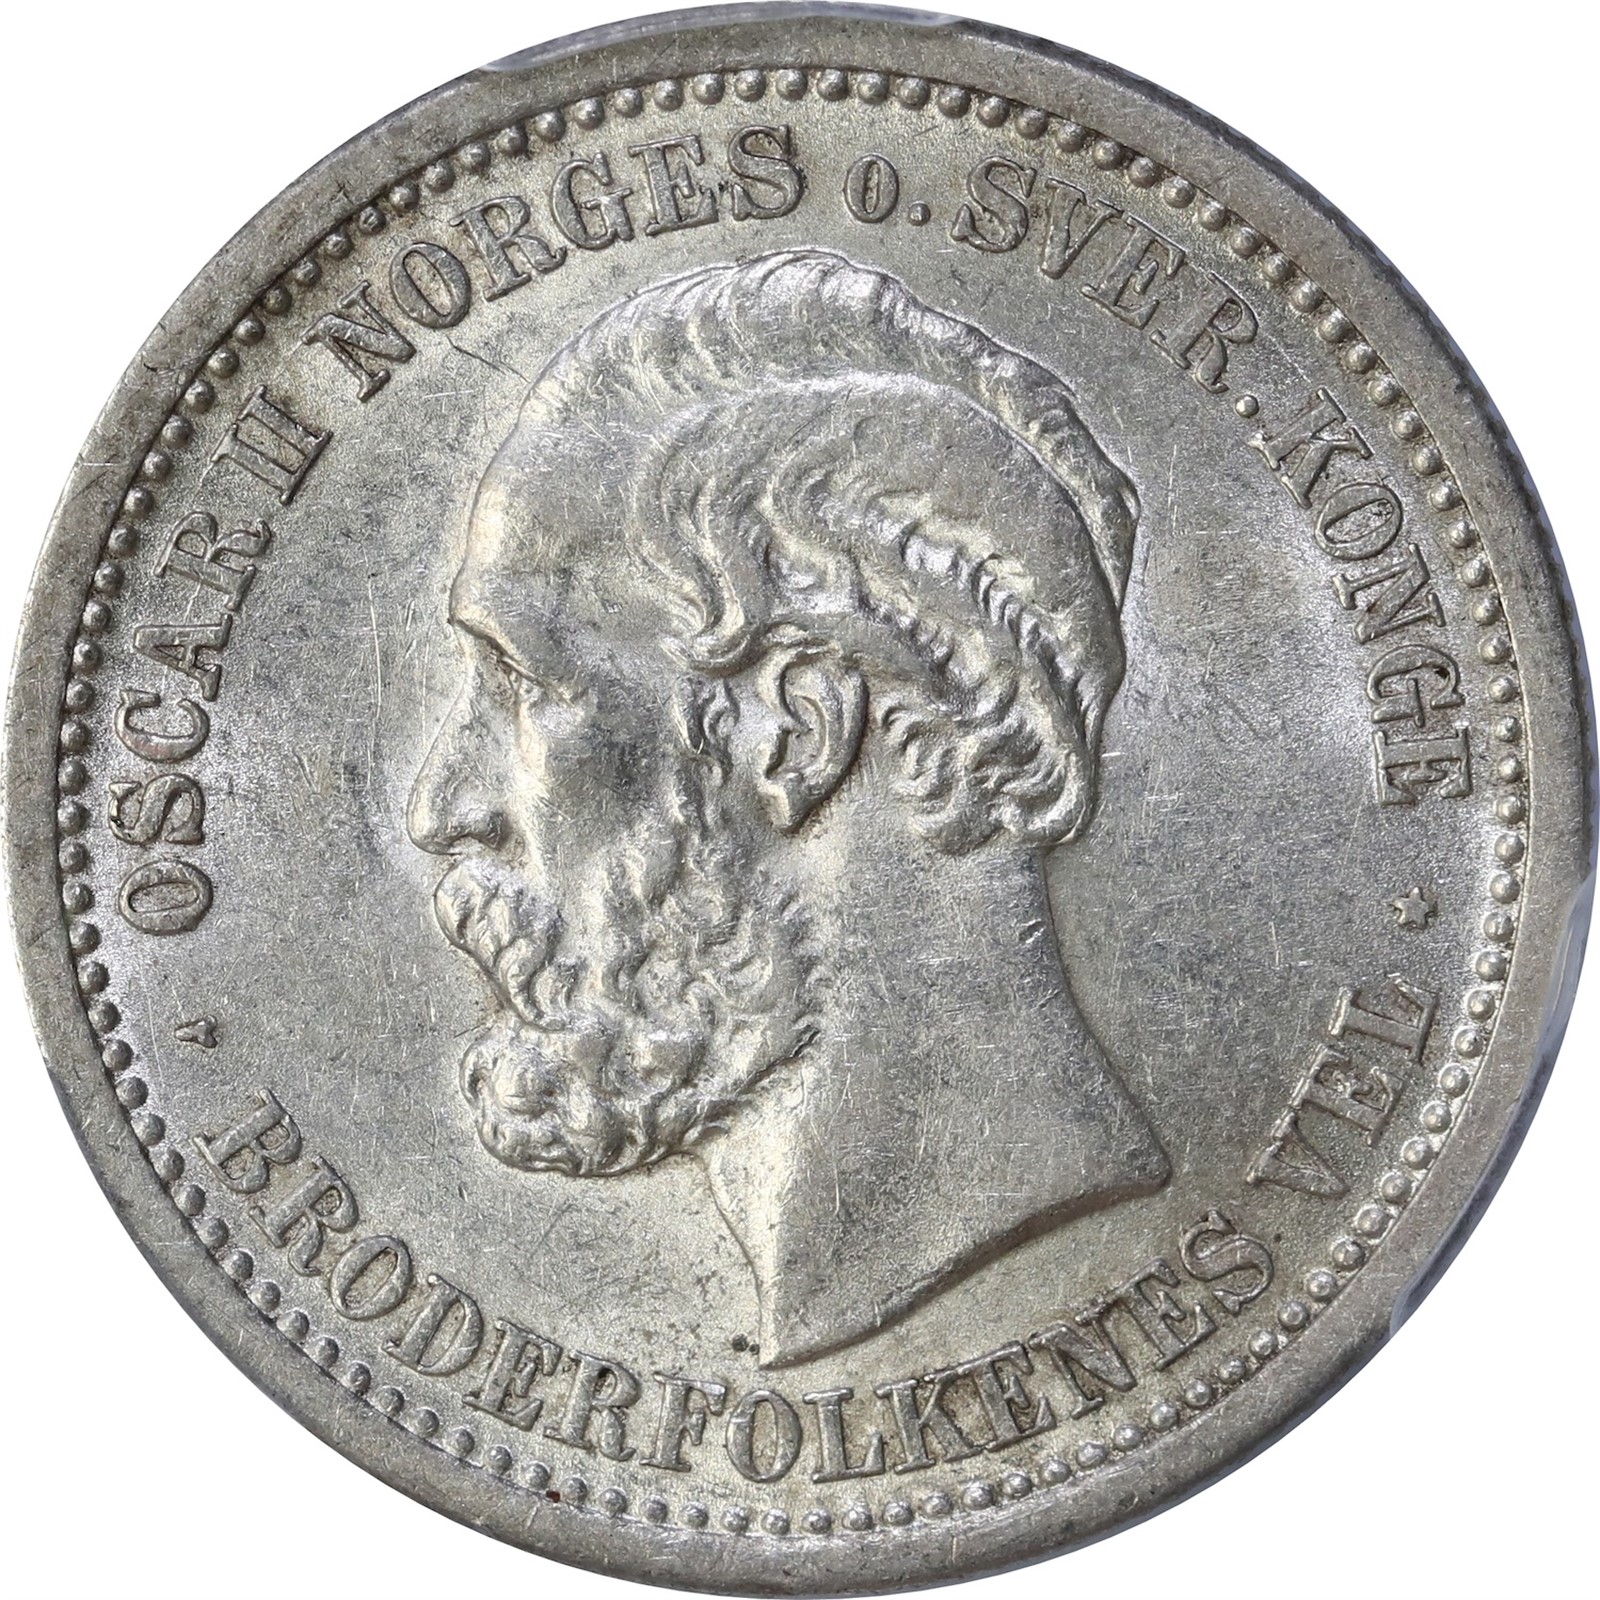 NORWAY. Oscar II. 1 Krone 1877 PCGS AU55